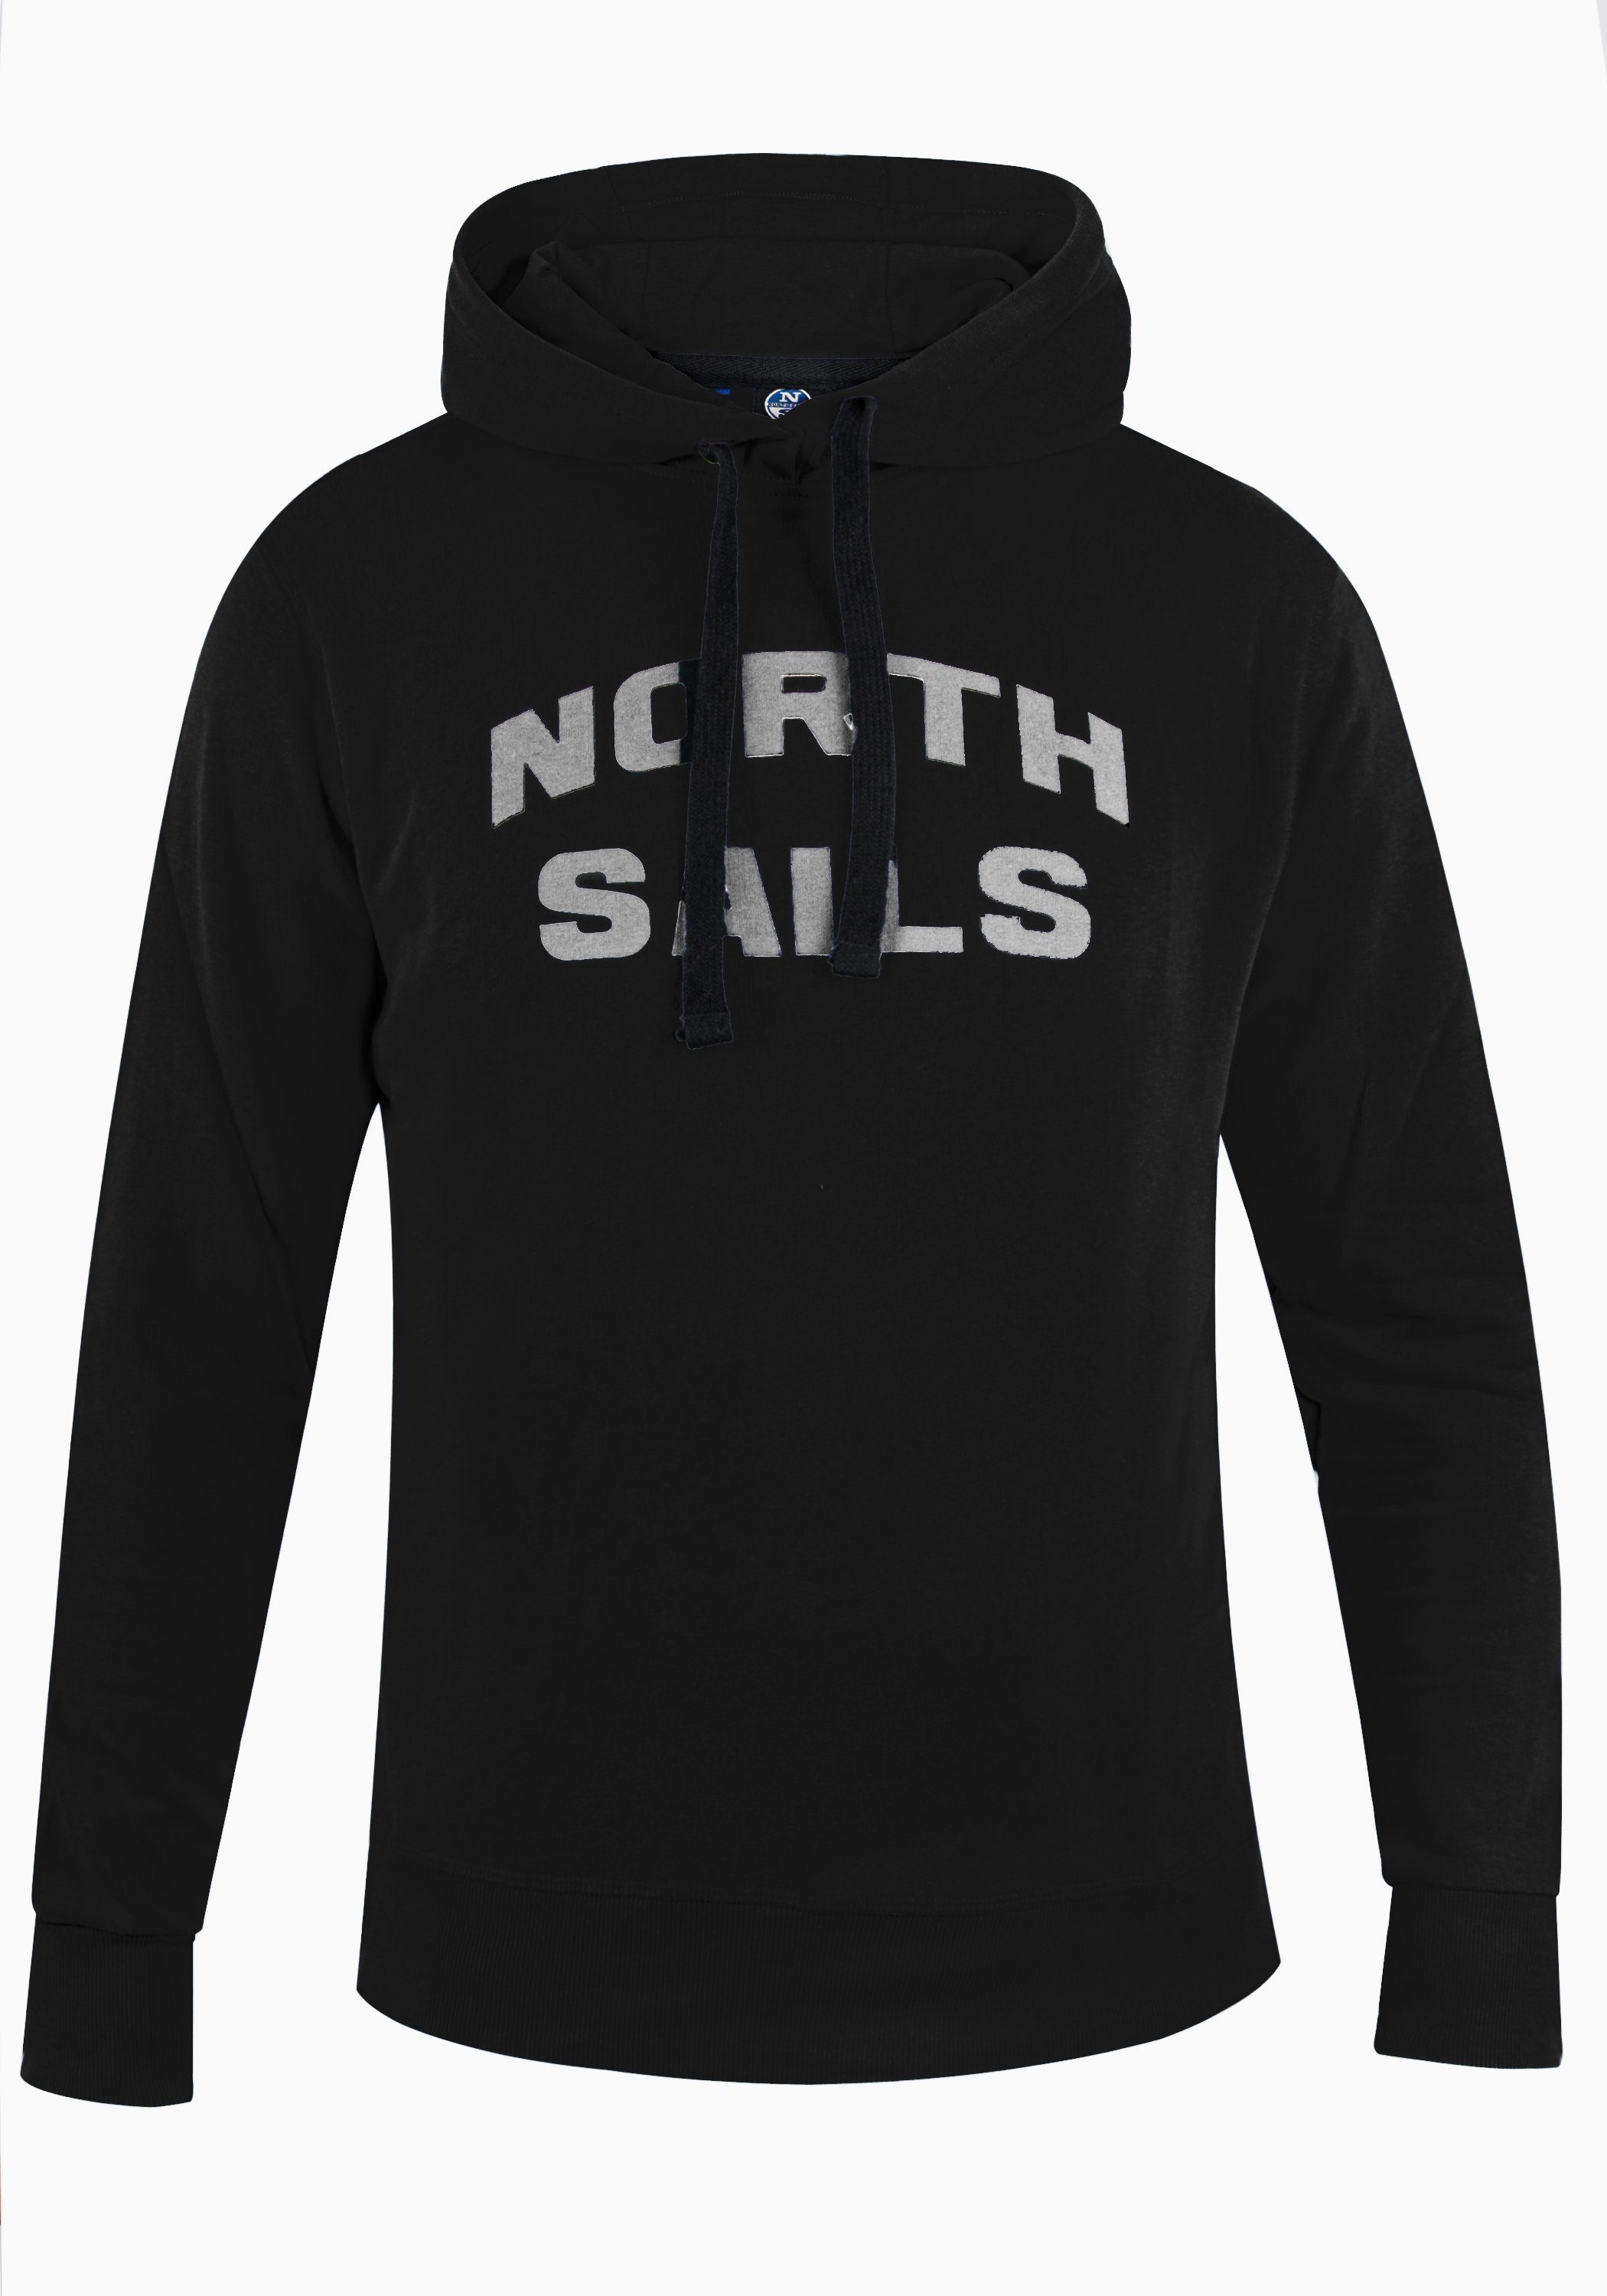 GRAPHIC Sails Sails HOODED W/ Herren Black North North Hoodie Kapuzensweatshirt